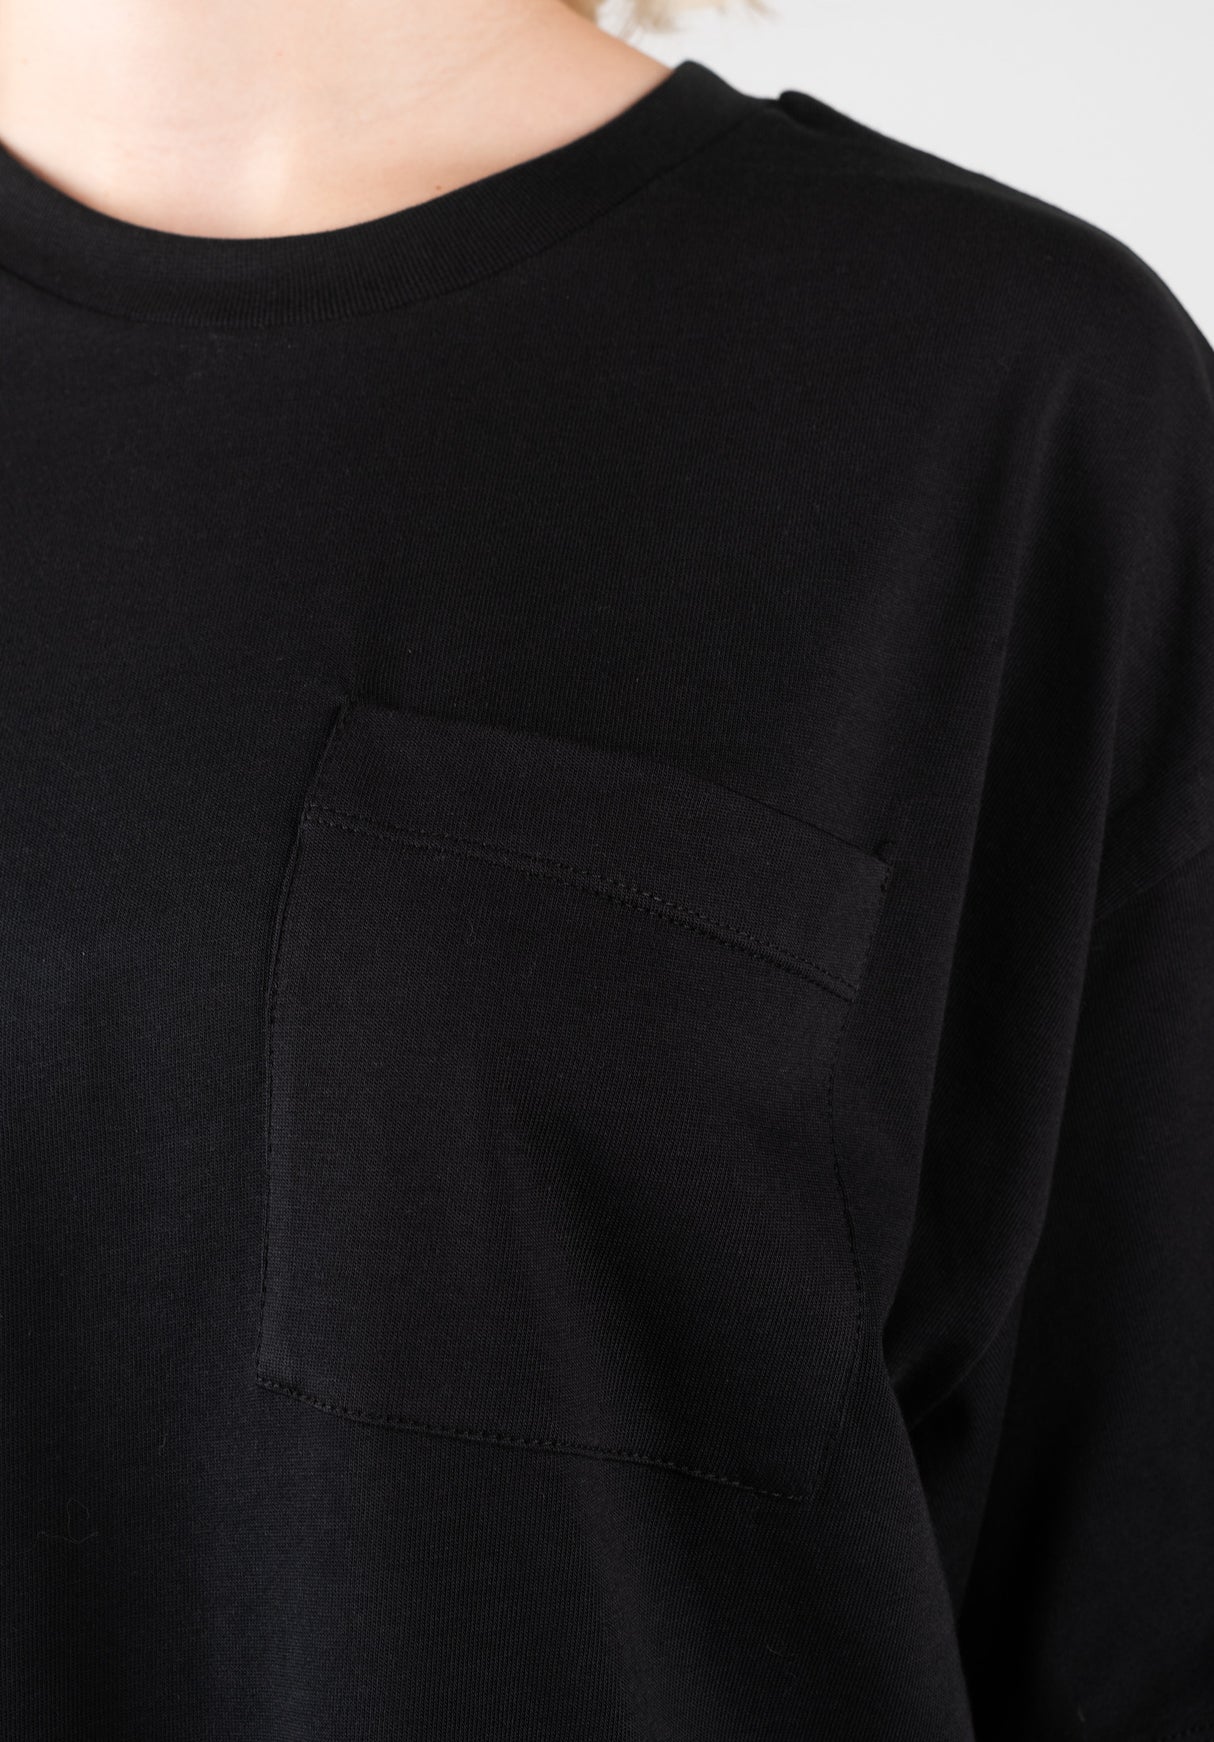 Sano Shirt Dress black Close-Up1